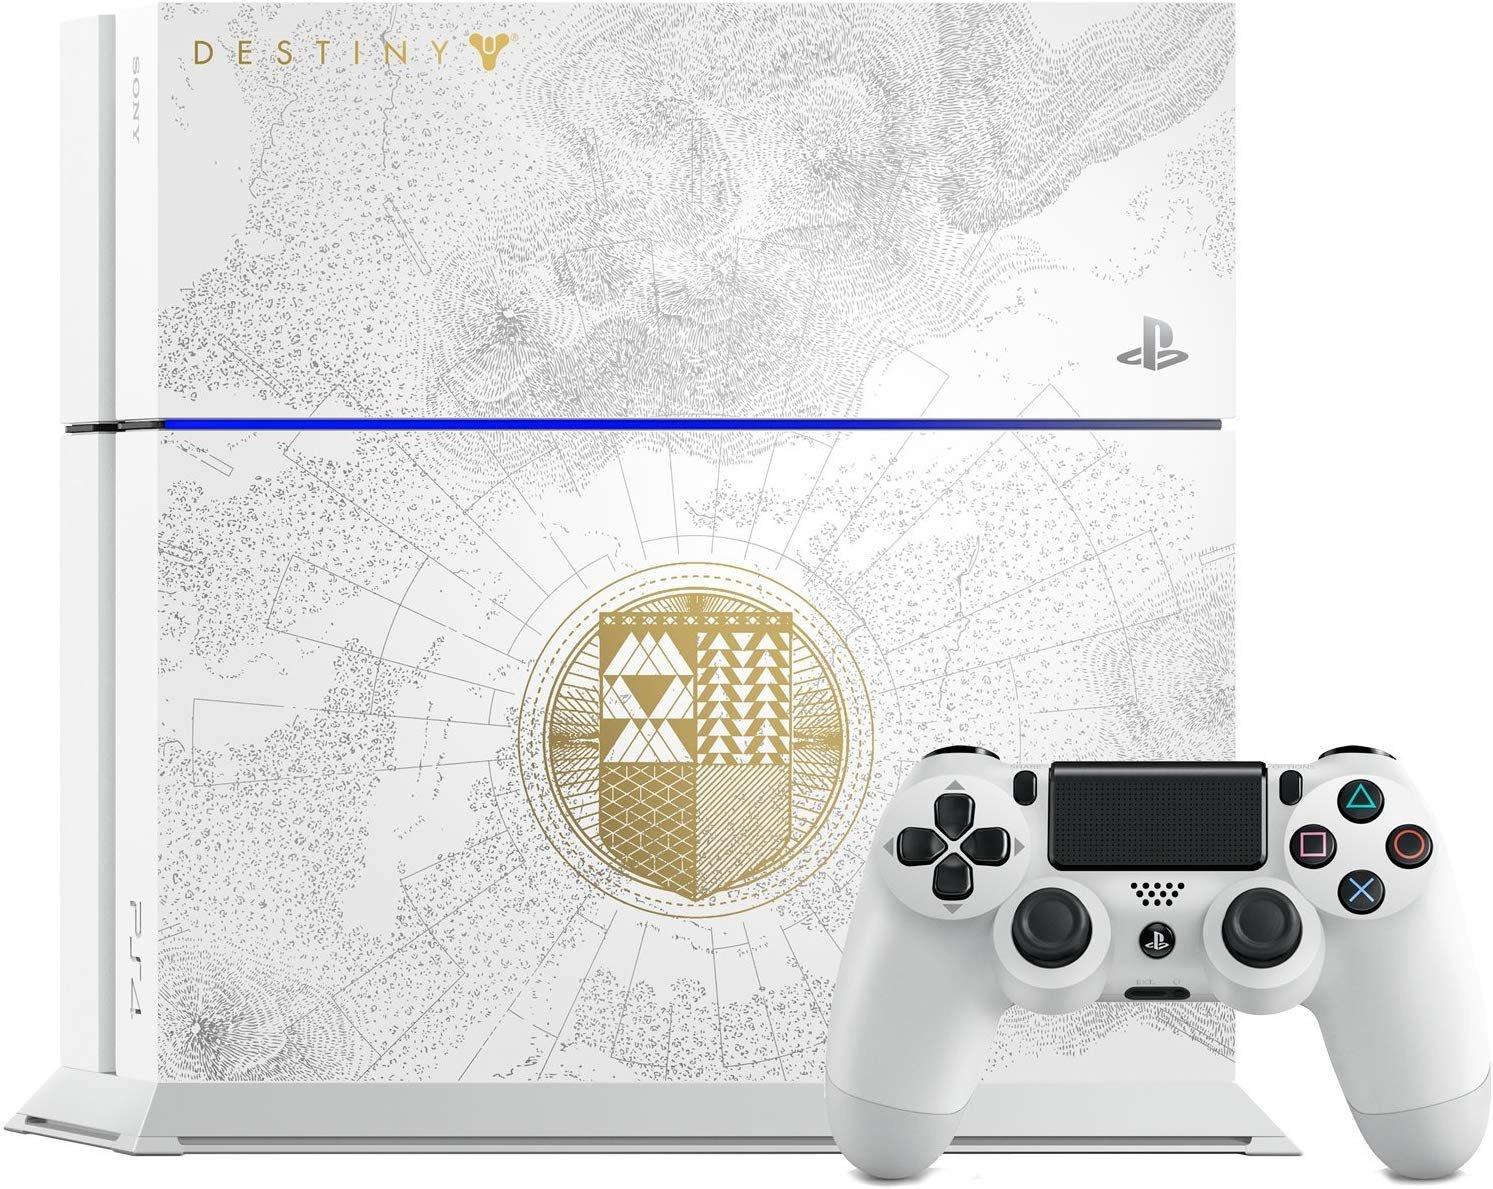 ps4 destiny edition release date